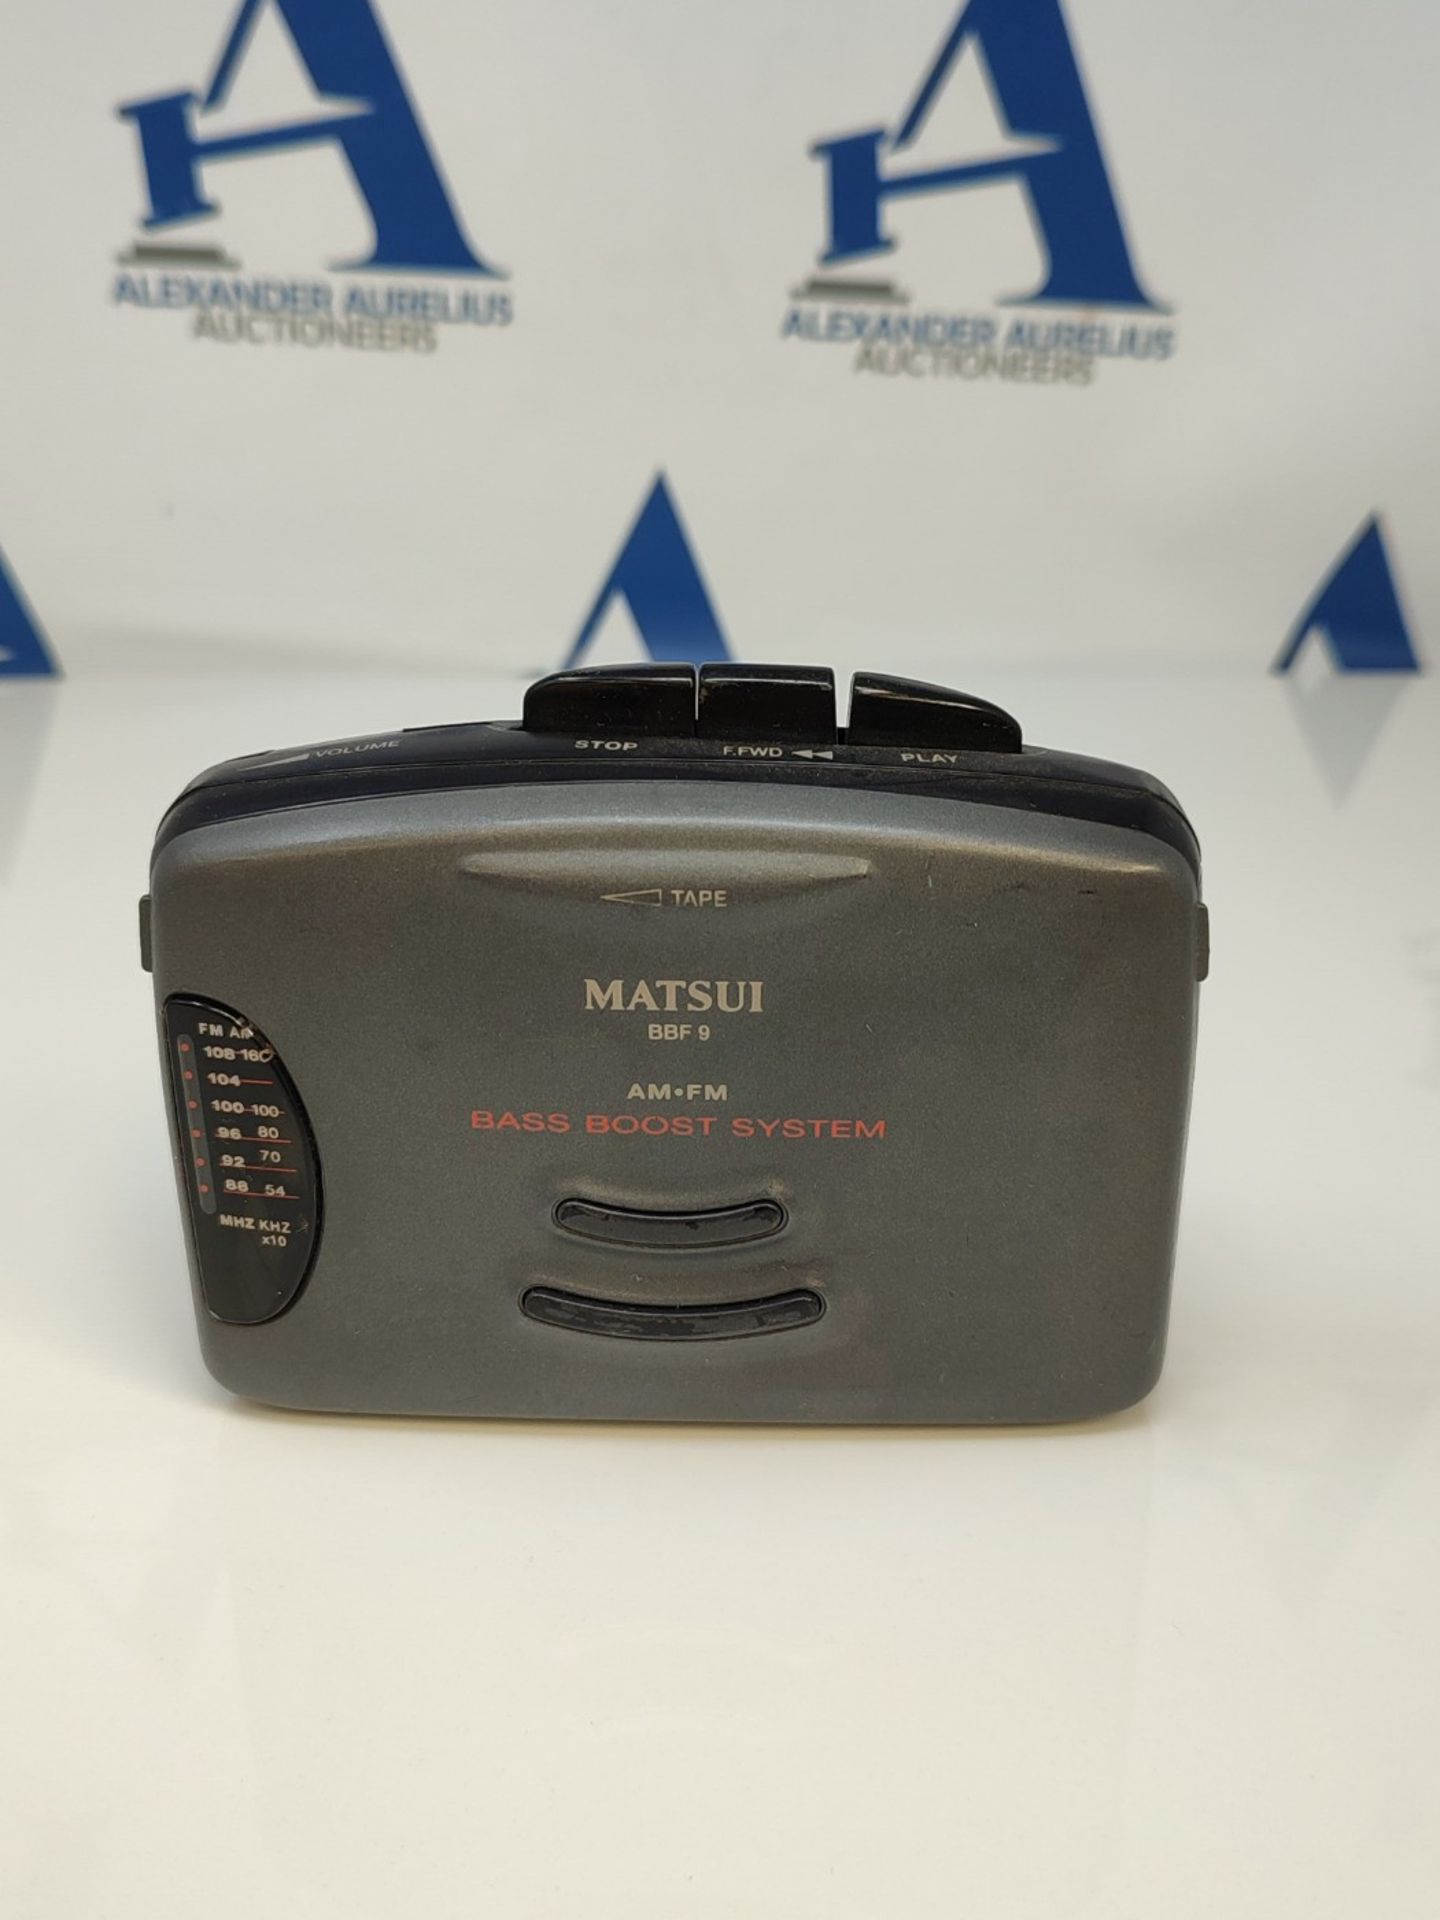 Matsui BBF9 AM/FM cassette player